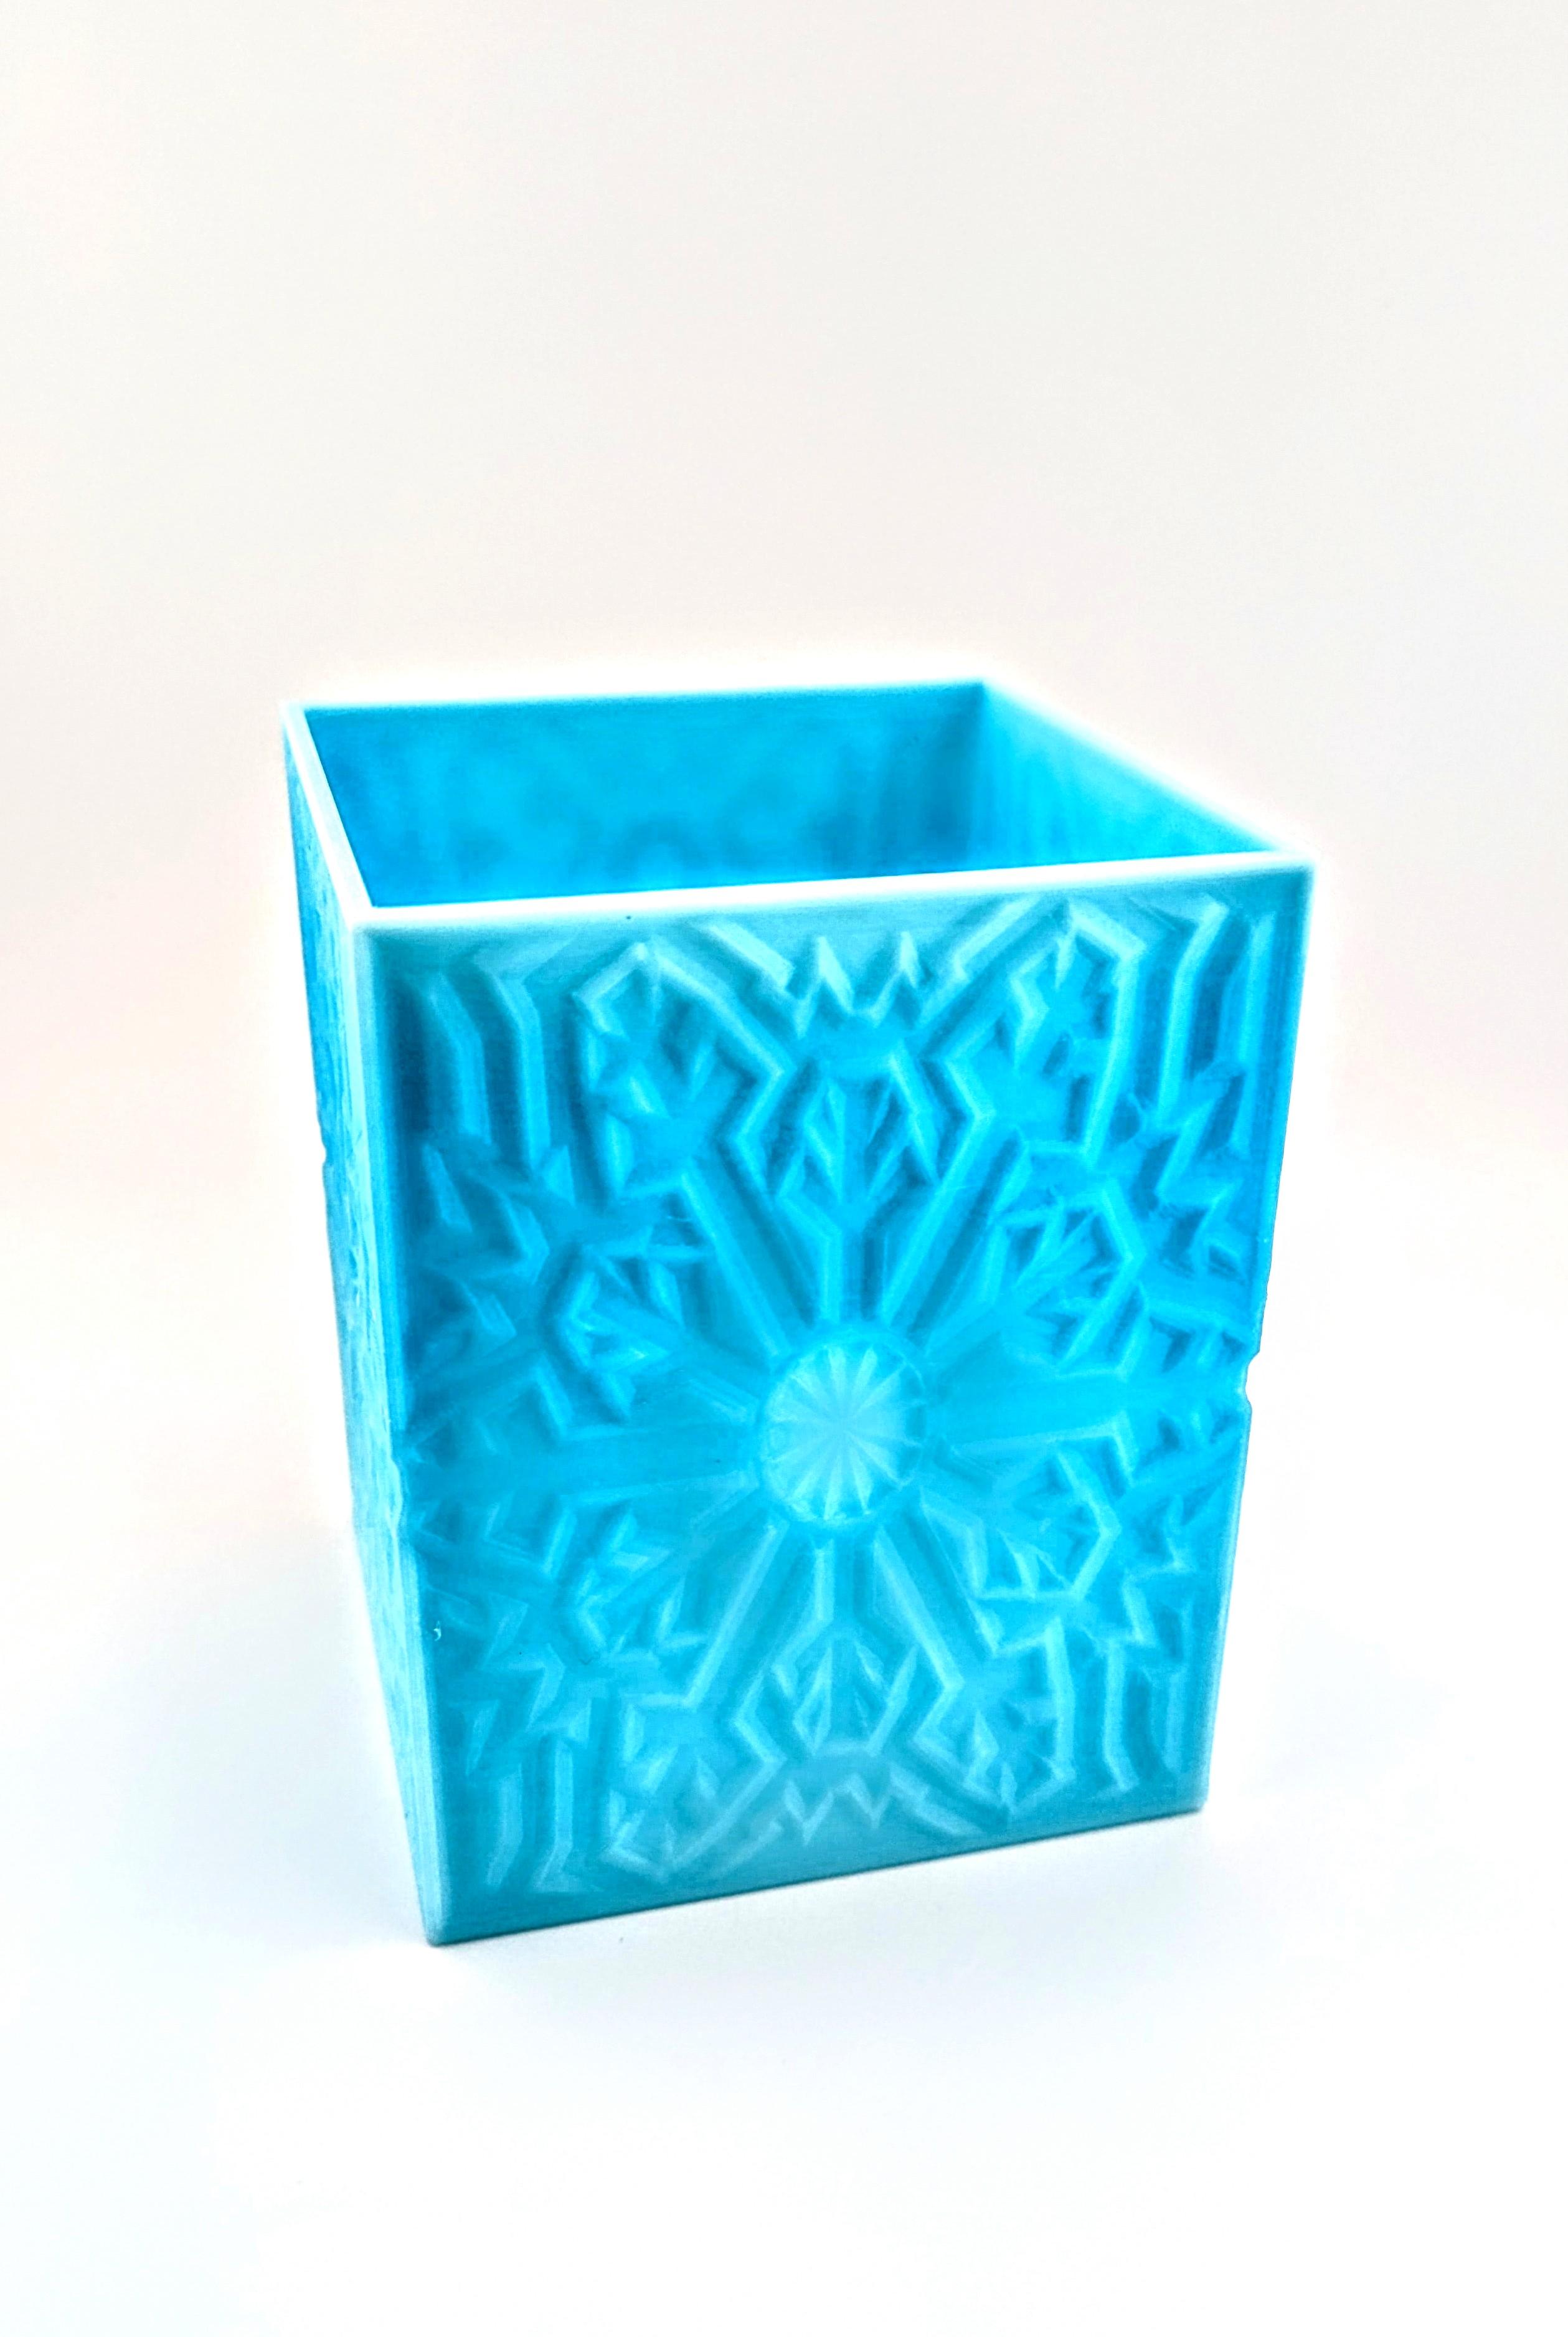 Frosted Vase (Square) 3d model